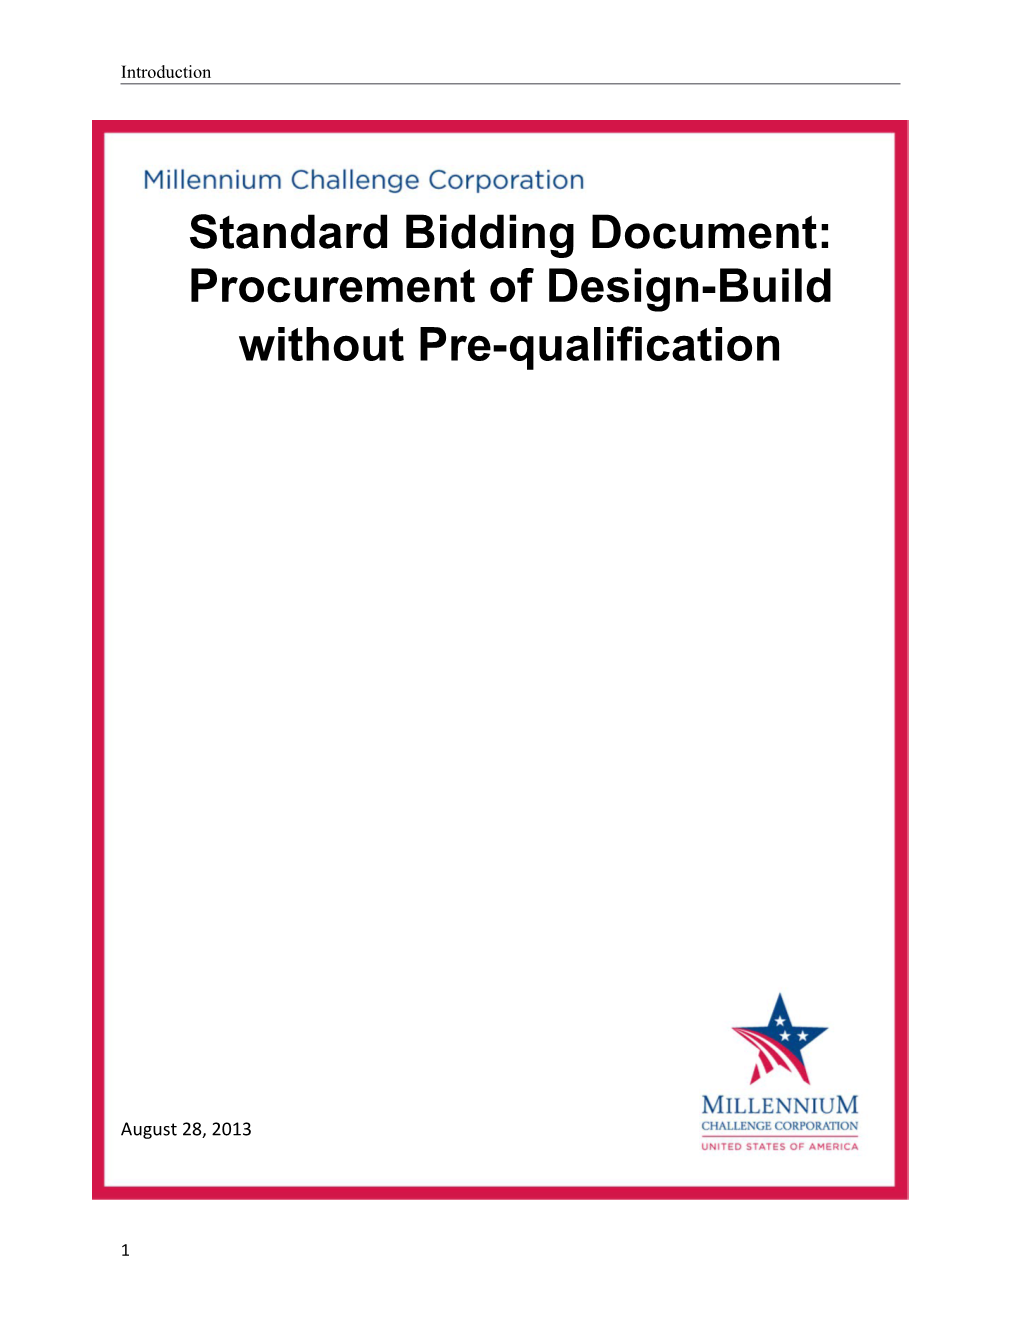 Standard Bidding Document: Procurement of Design-Build